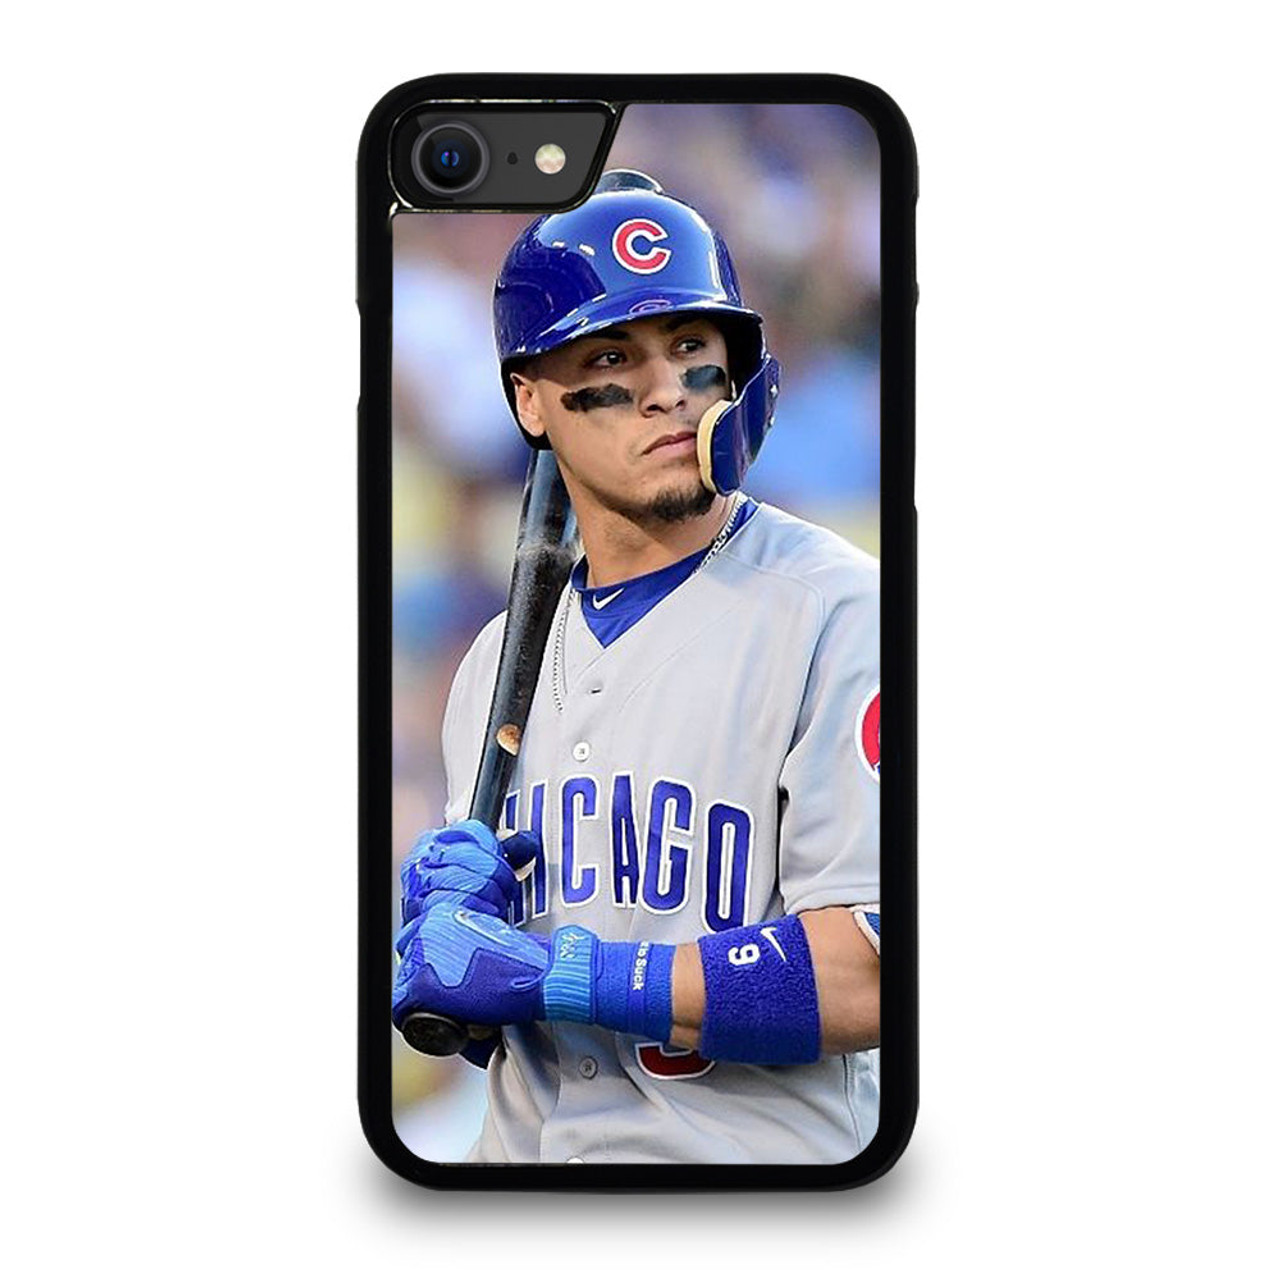 JAVIER BAEZ CHICAGO CUBS BASEBALL iPhone SE 2020 Case Cover